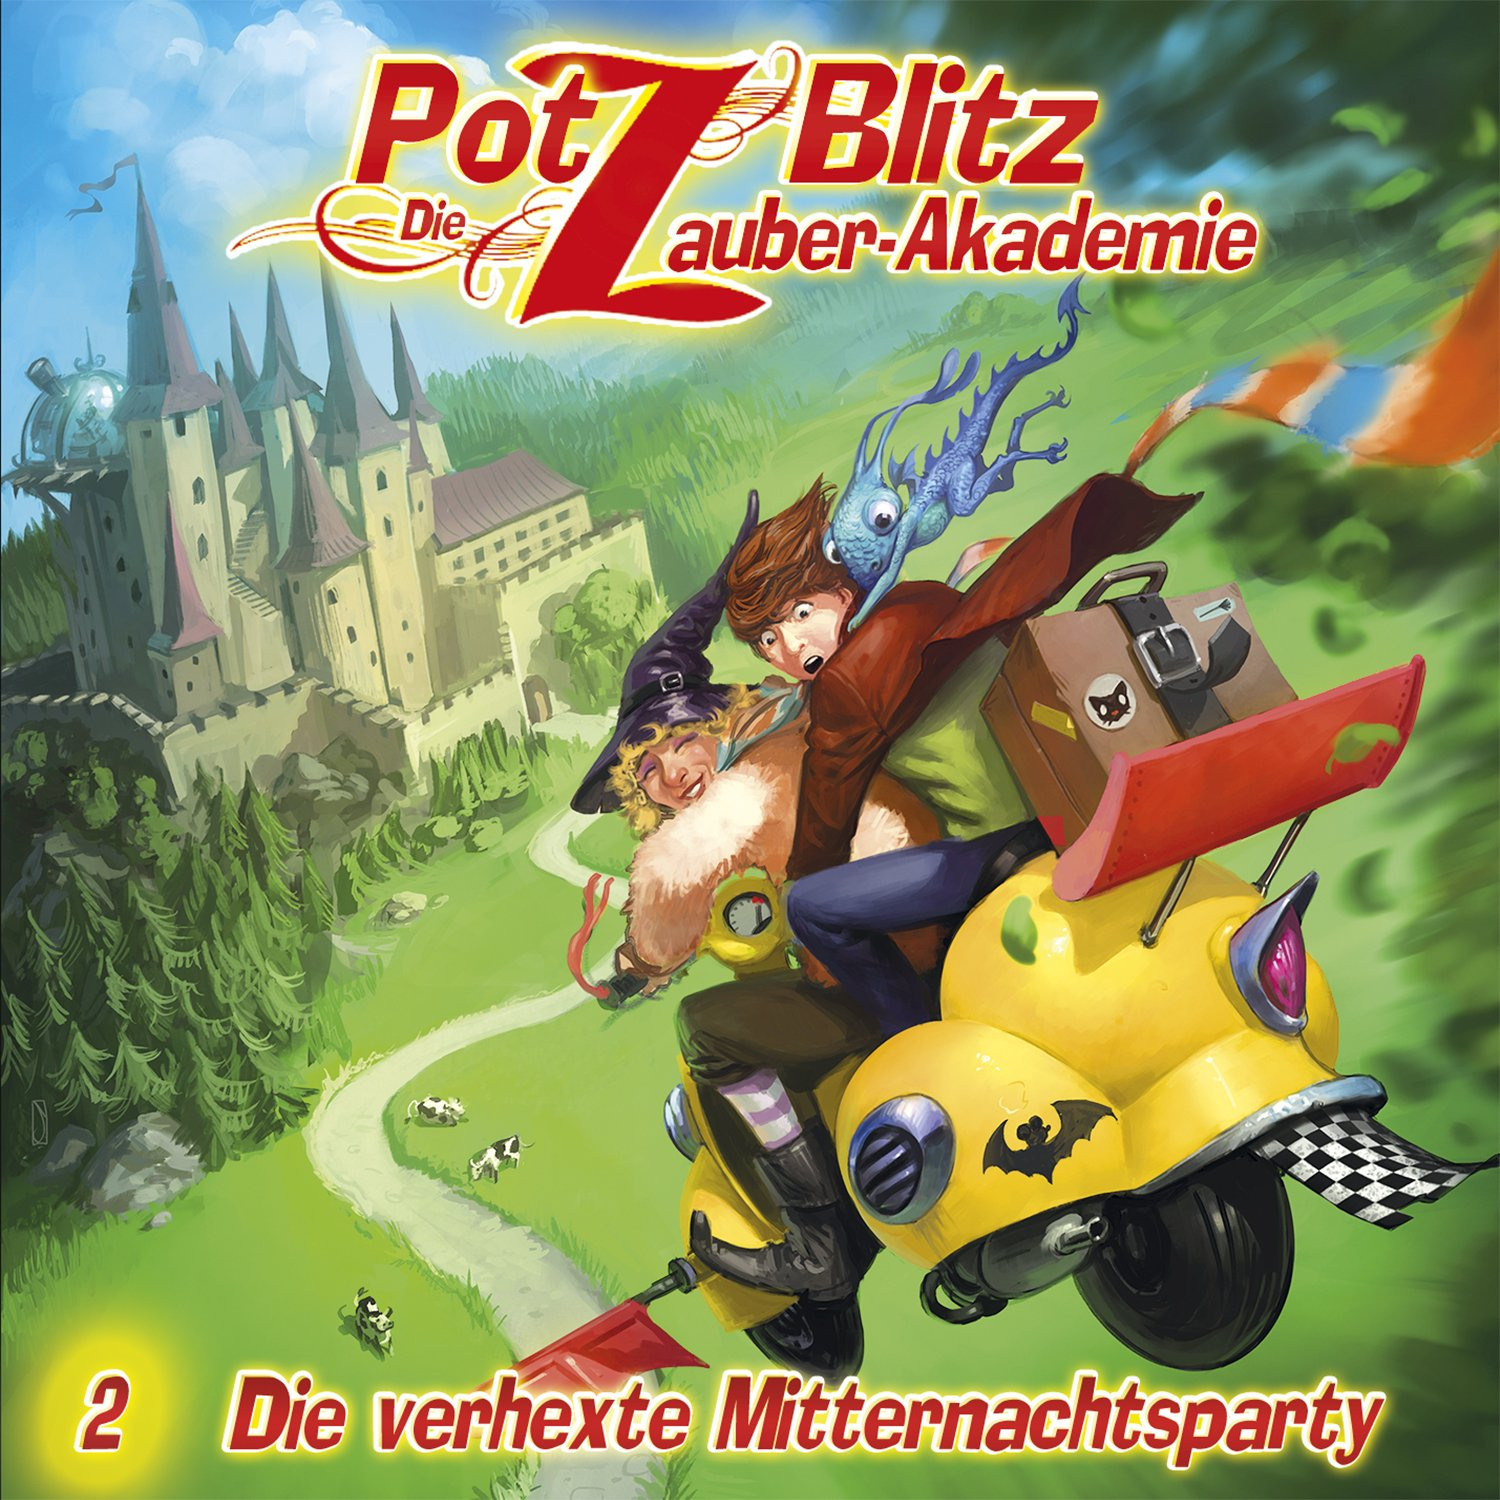 Potz Blitz - Die Zauberakademie 2: verhexte Mitternachtsparty